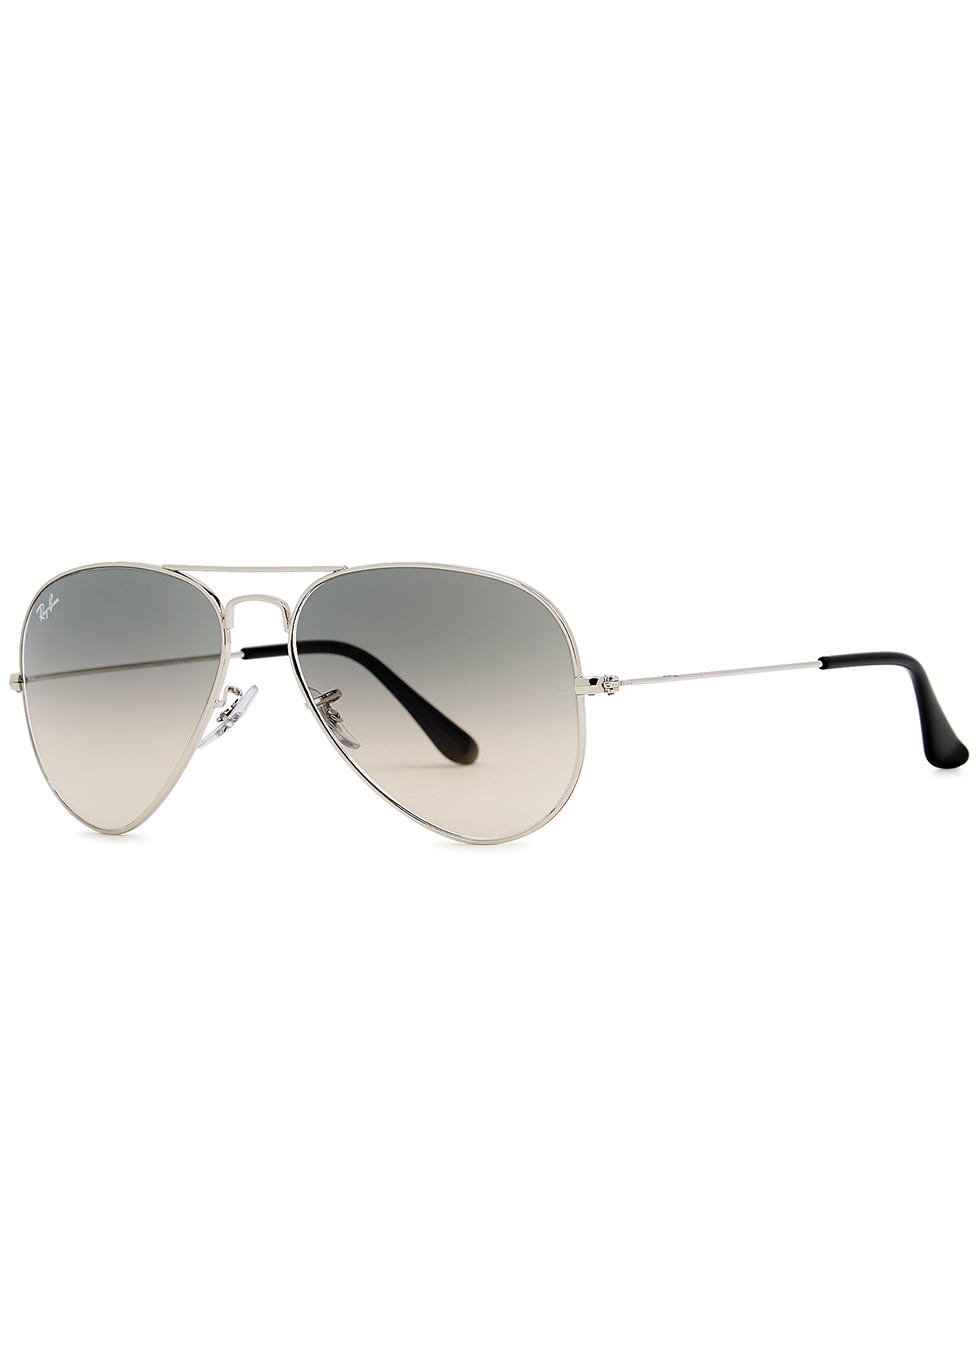 Ray-Ban Silver-tone aviator sunglasses 